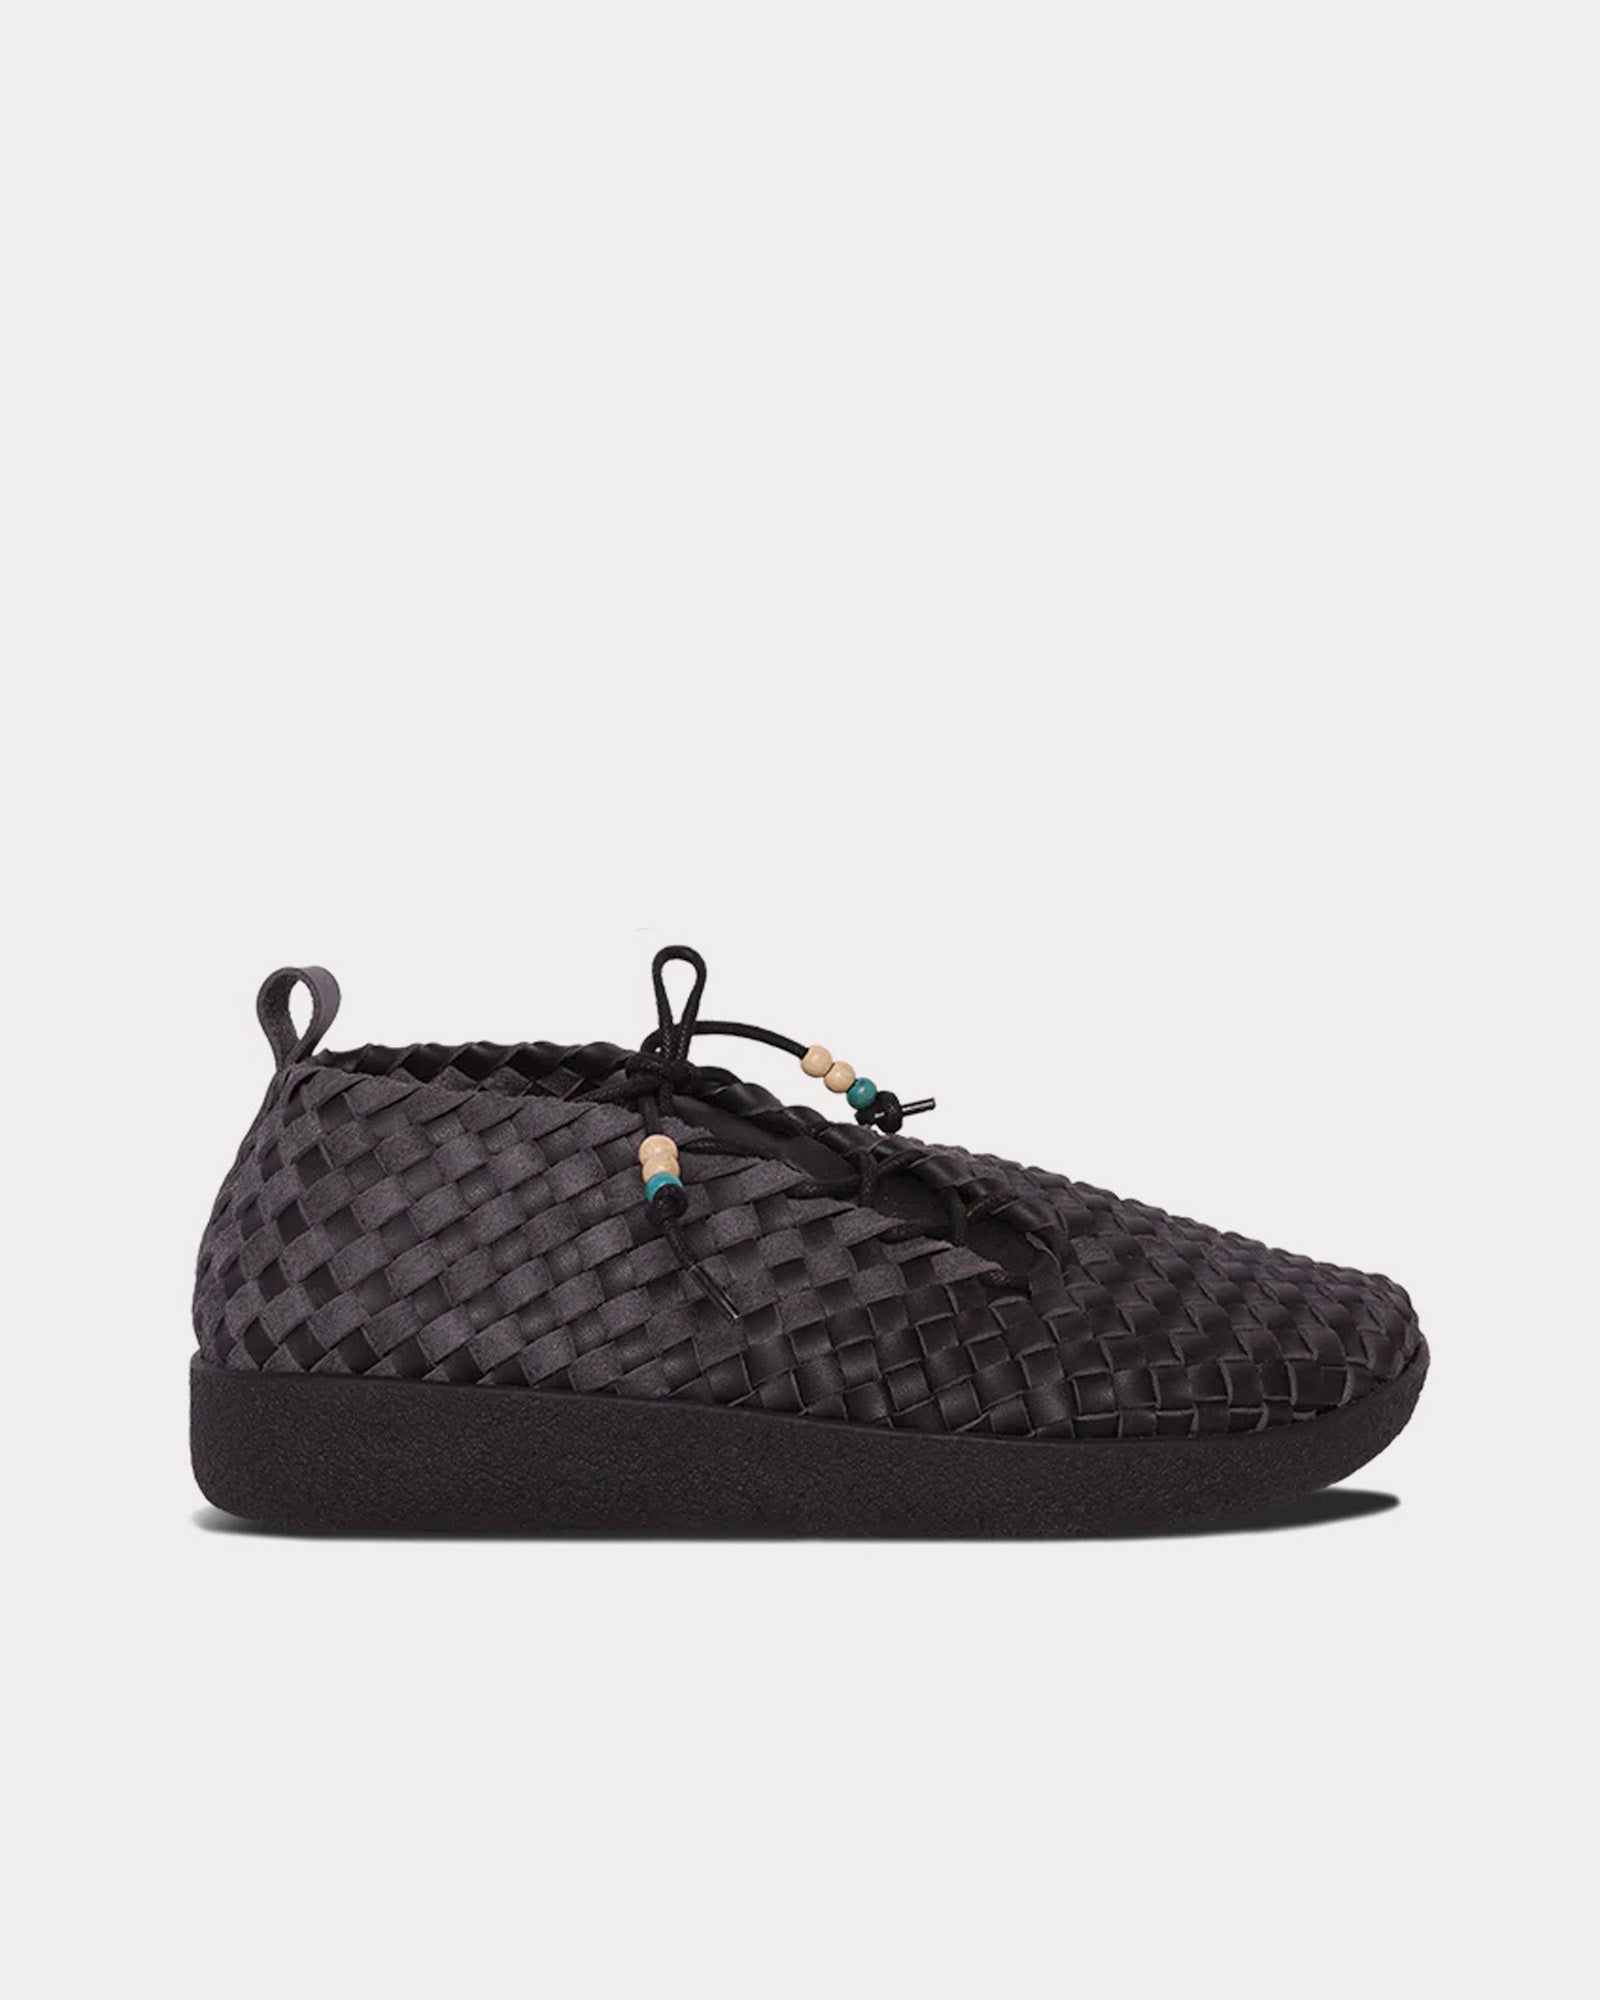 Malibu Sandals - Matador Chukka Vegan Leather Black Low Top Sneakers